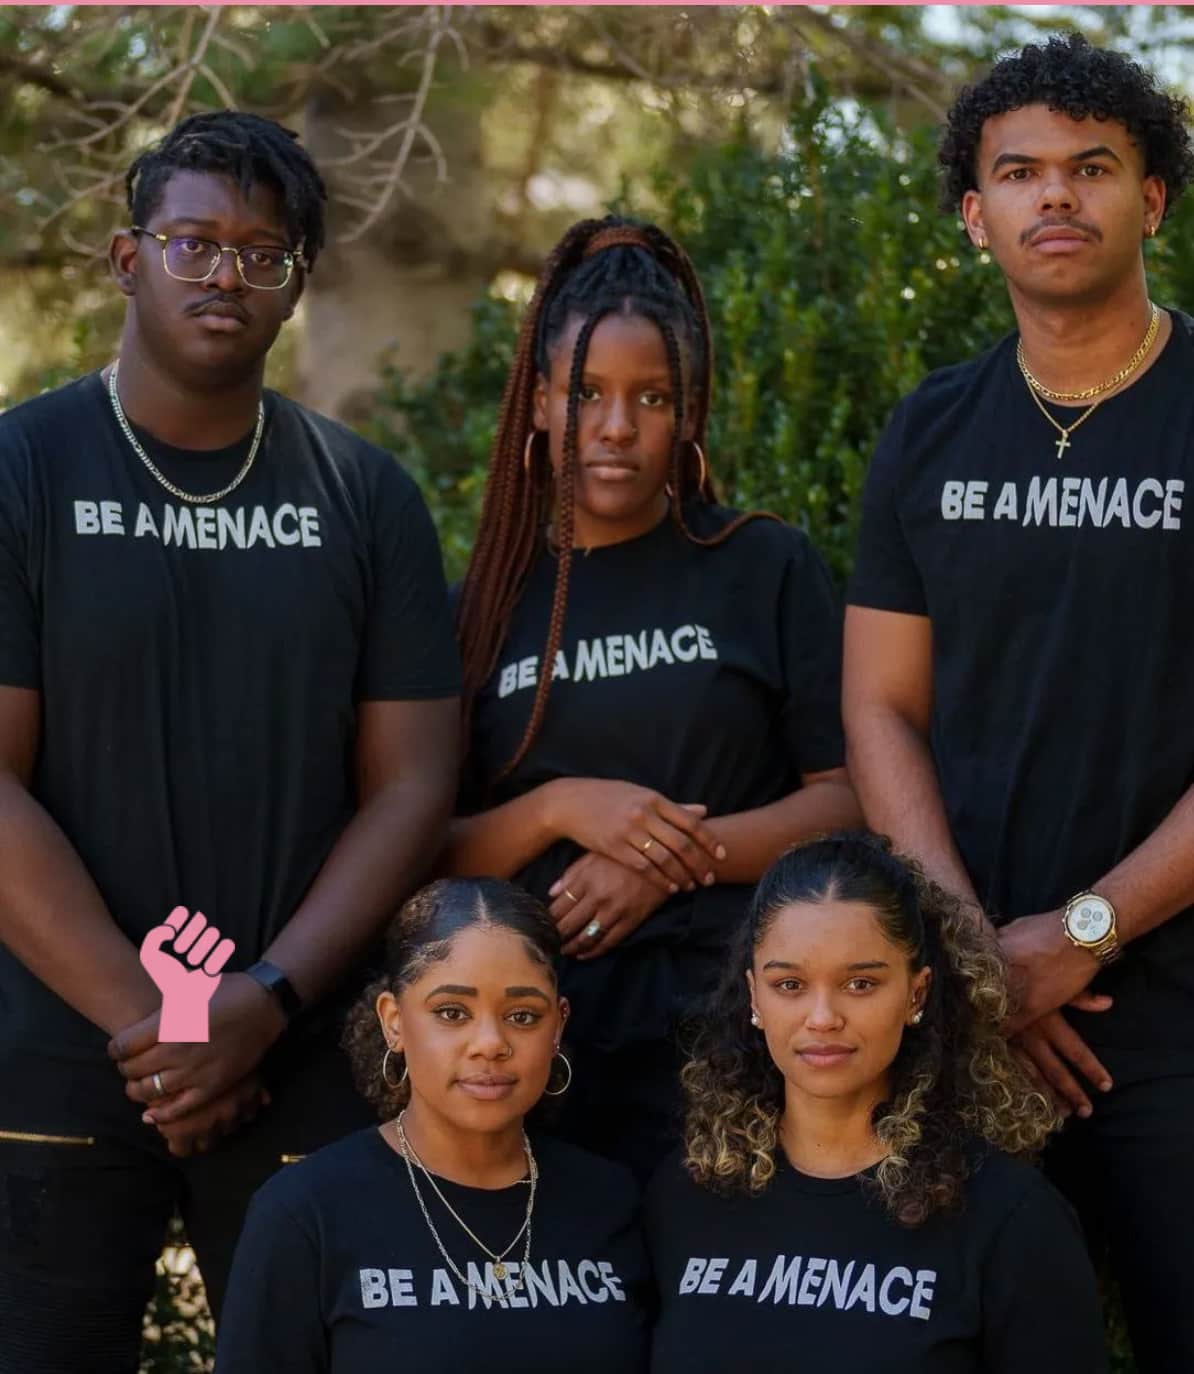 Group of 5 Black Menaces black T shirts